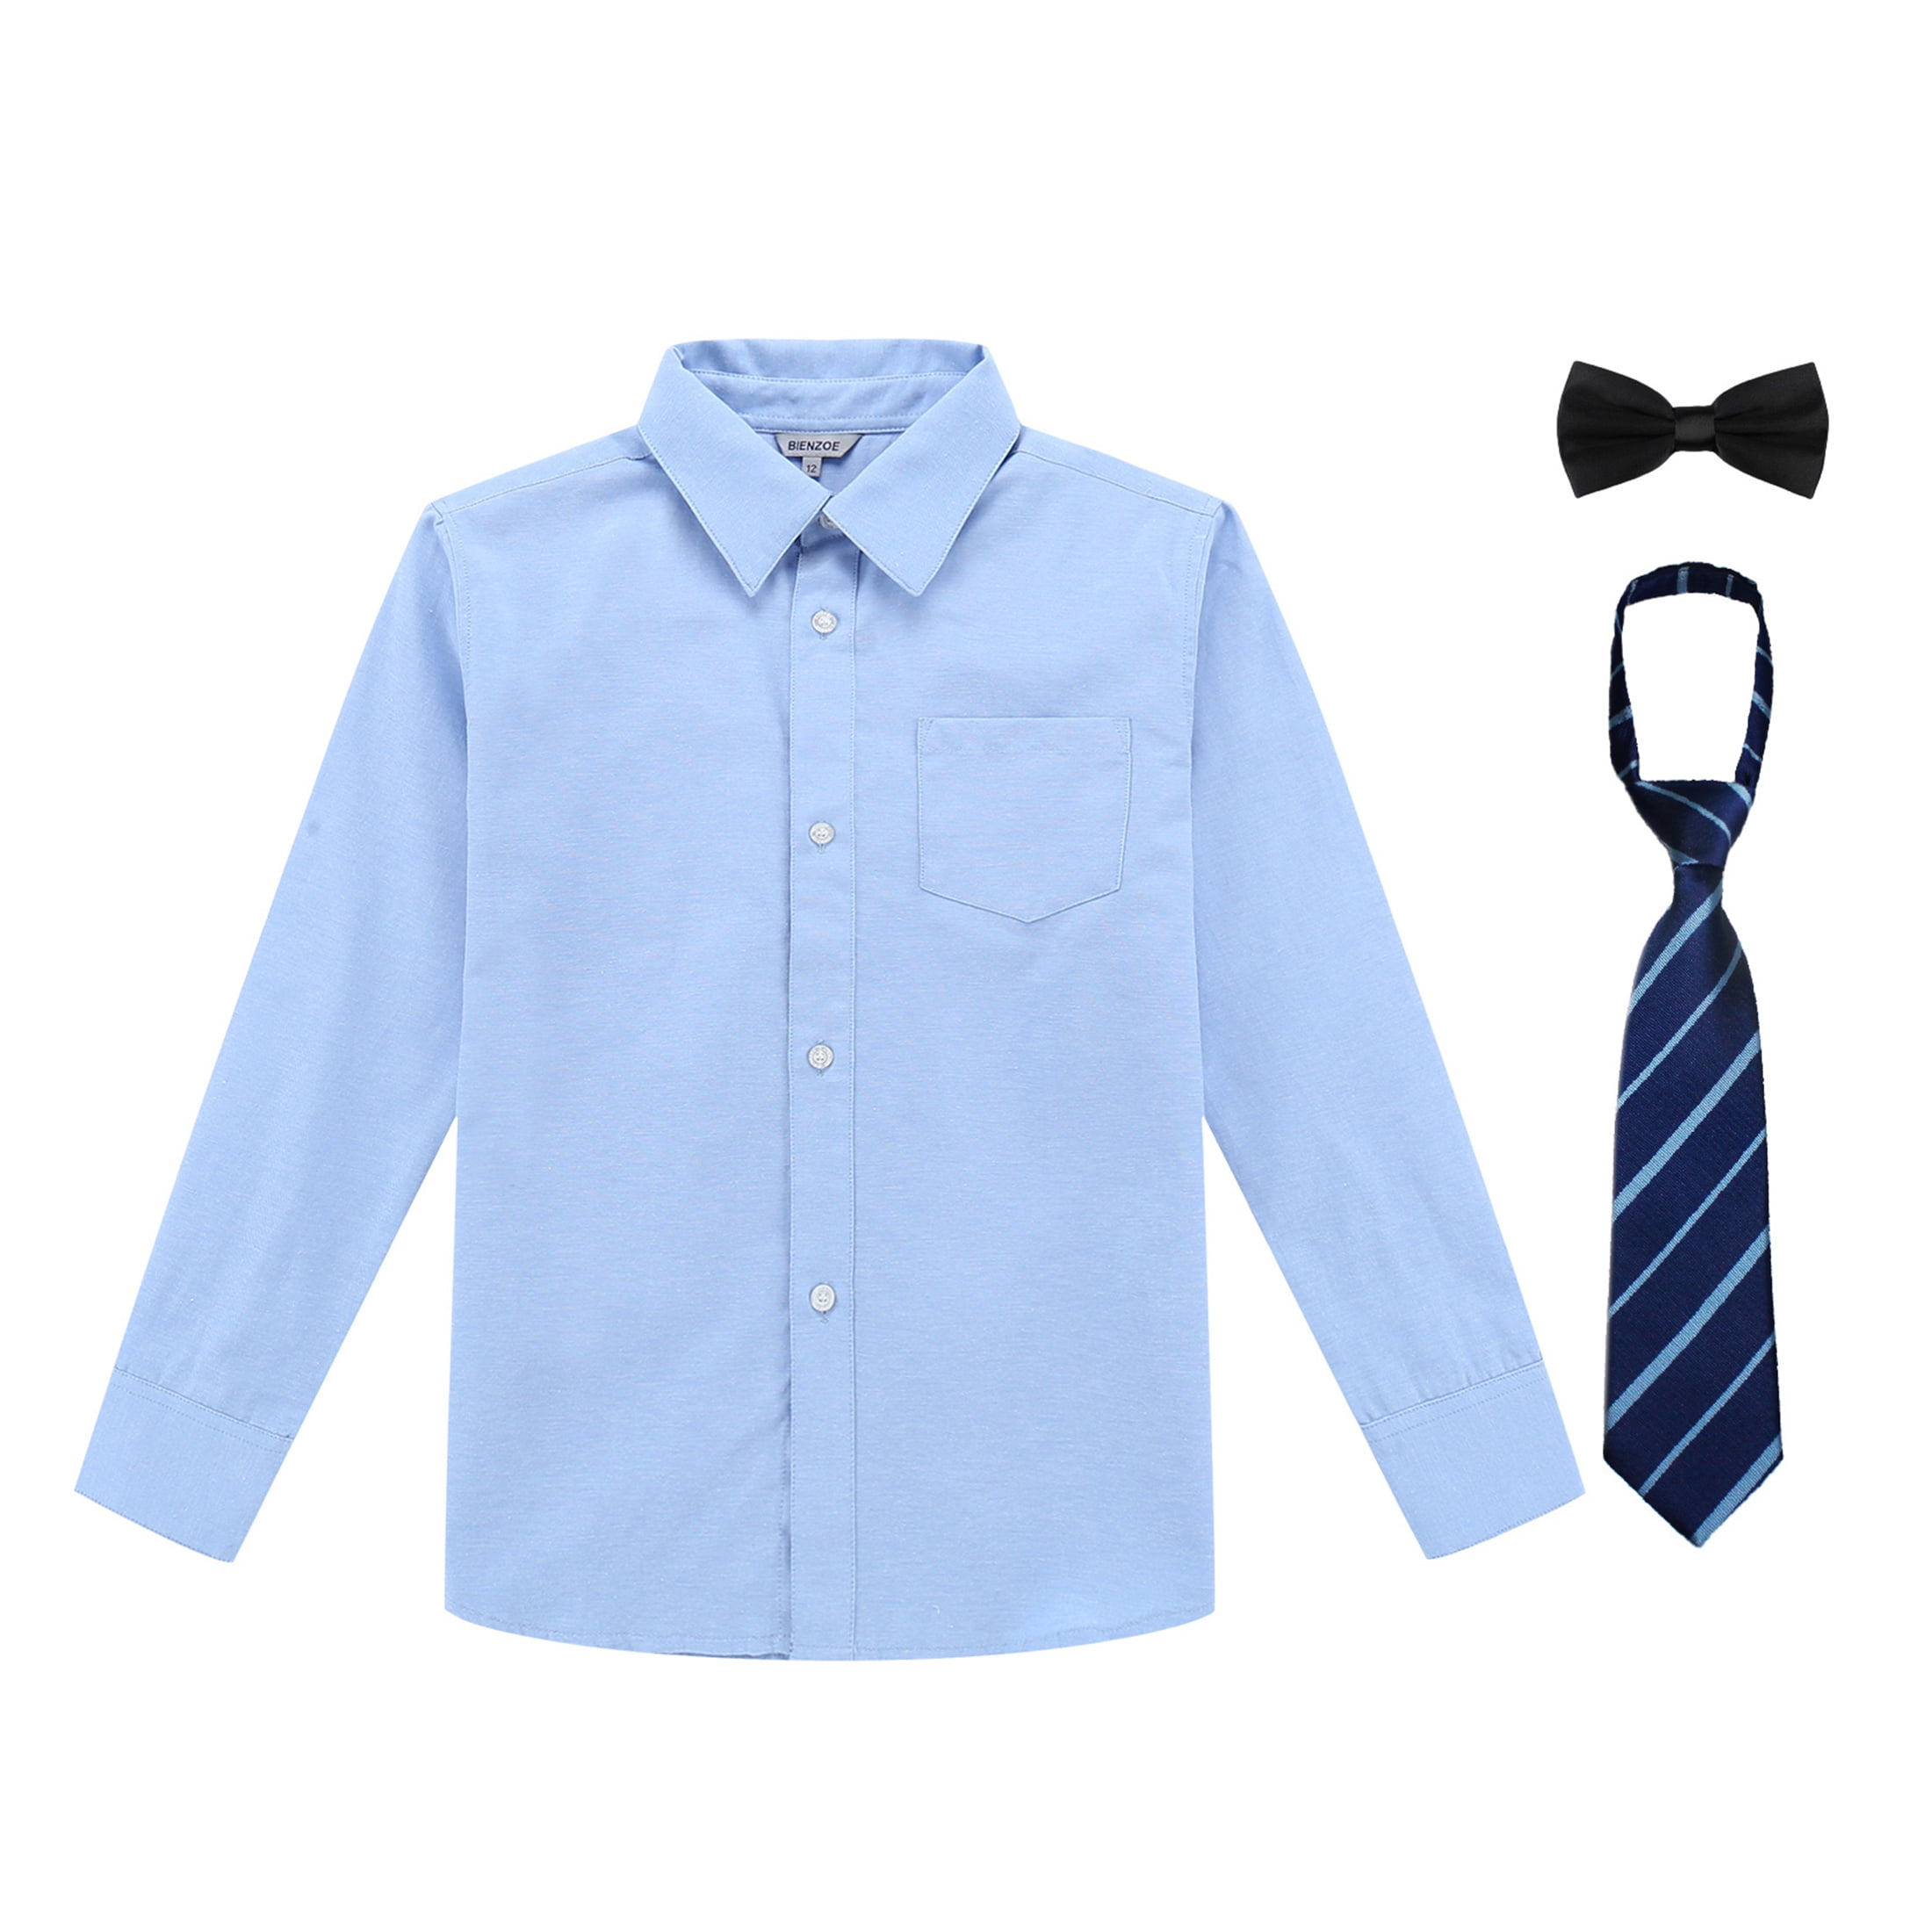 Bienzoe Boys School Uniform Long Sleeve Button Down Oxford Shirt